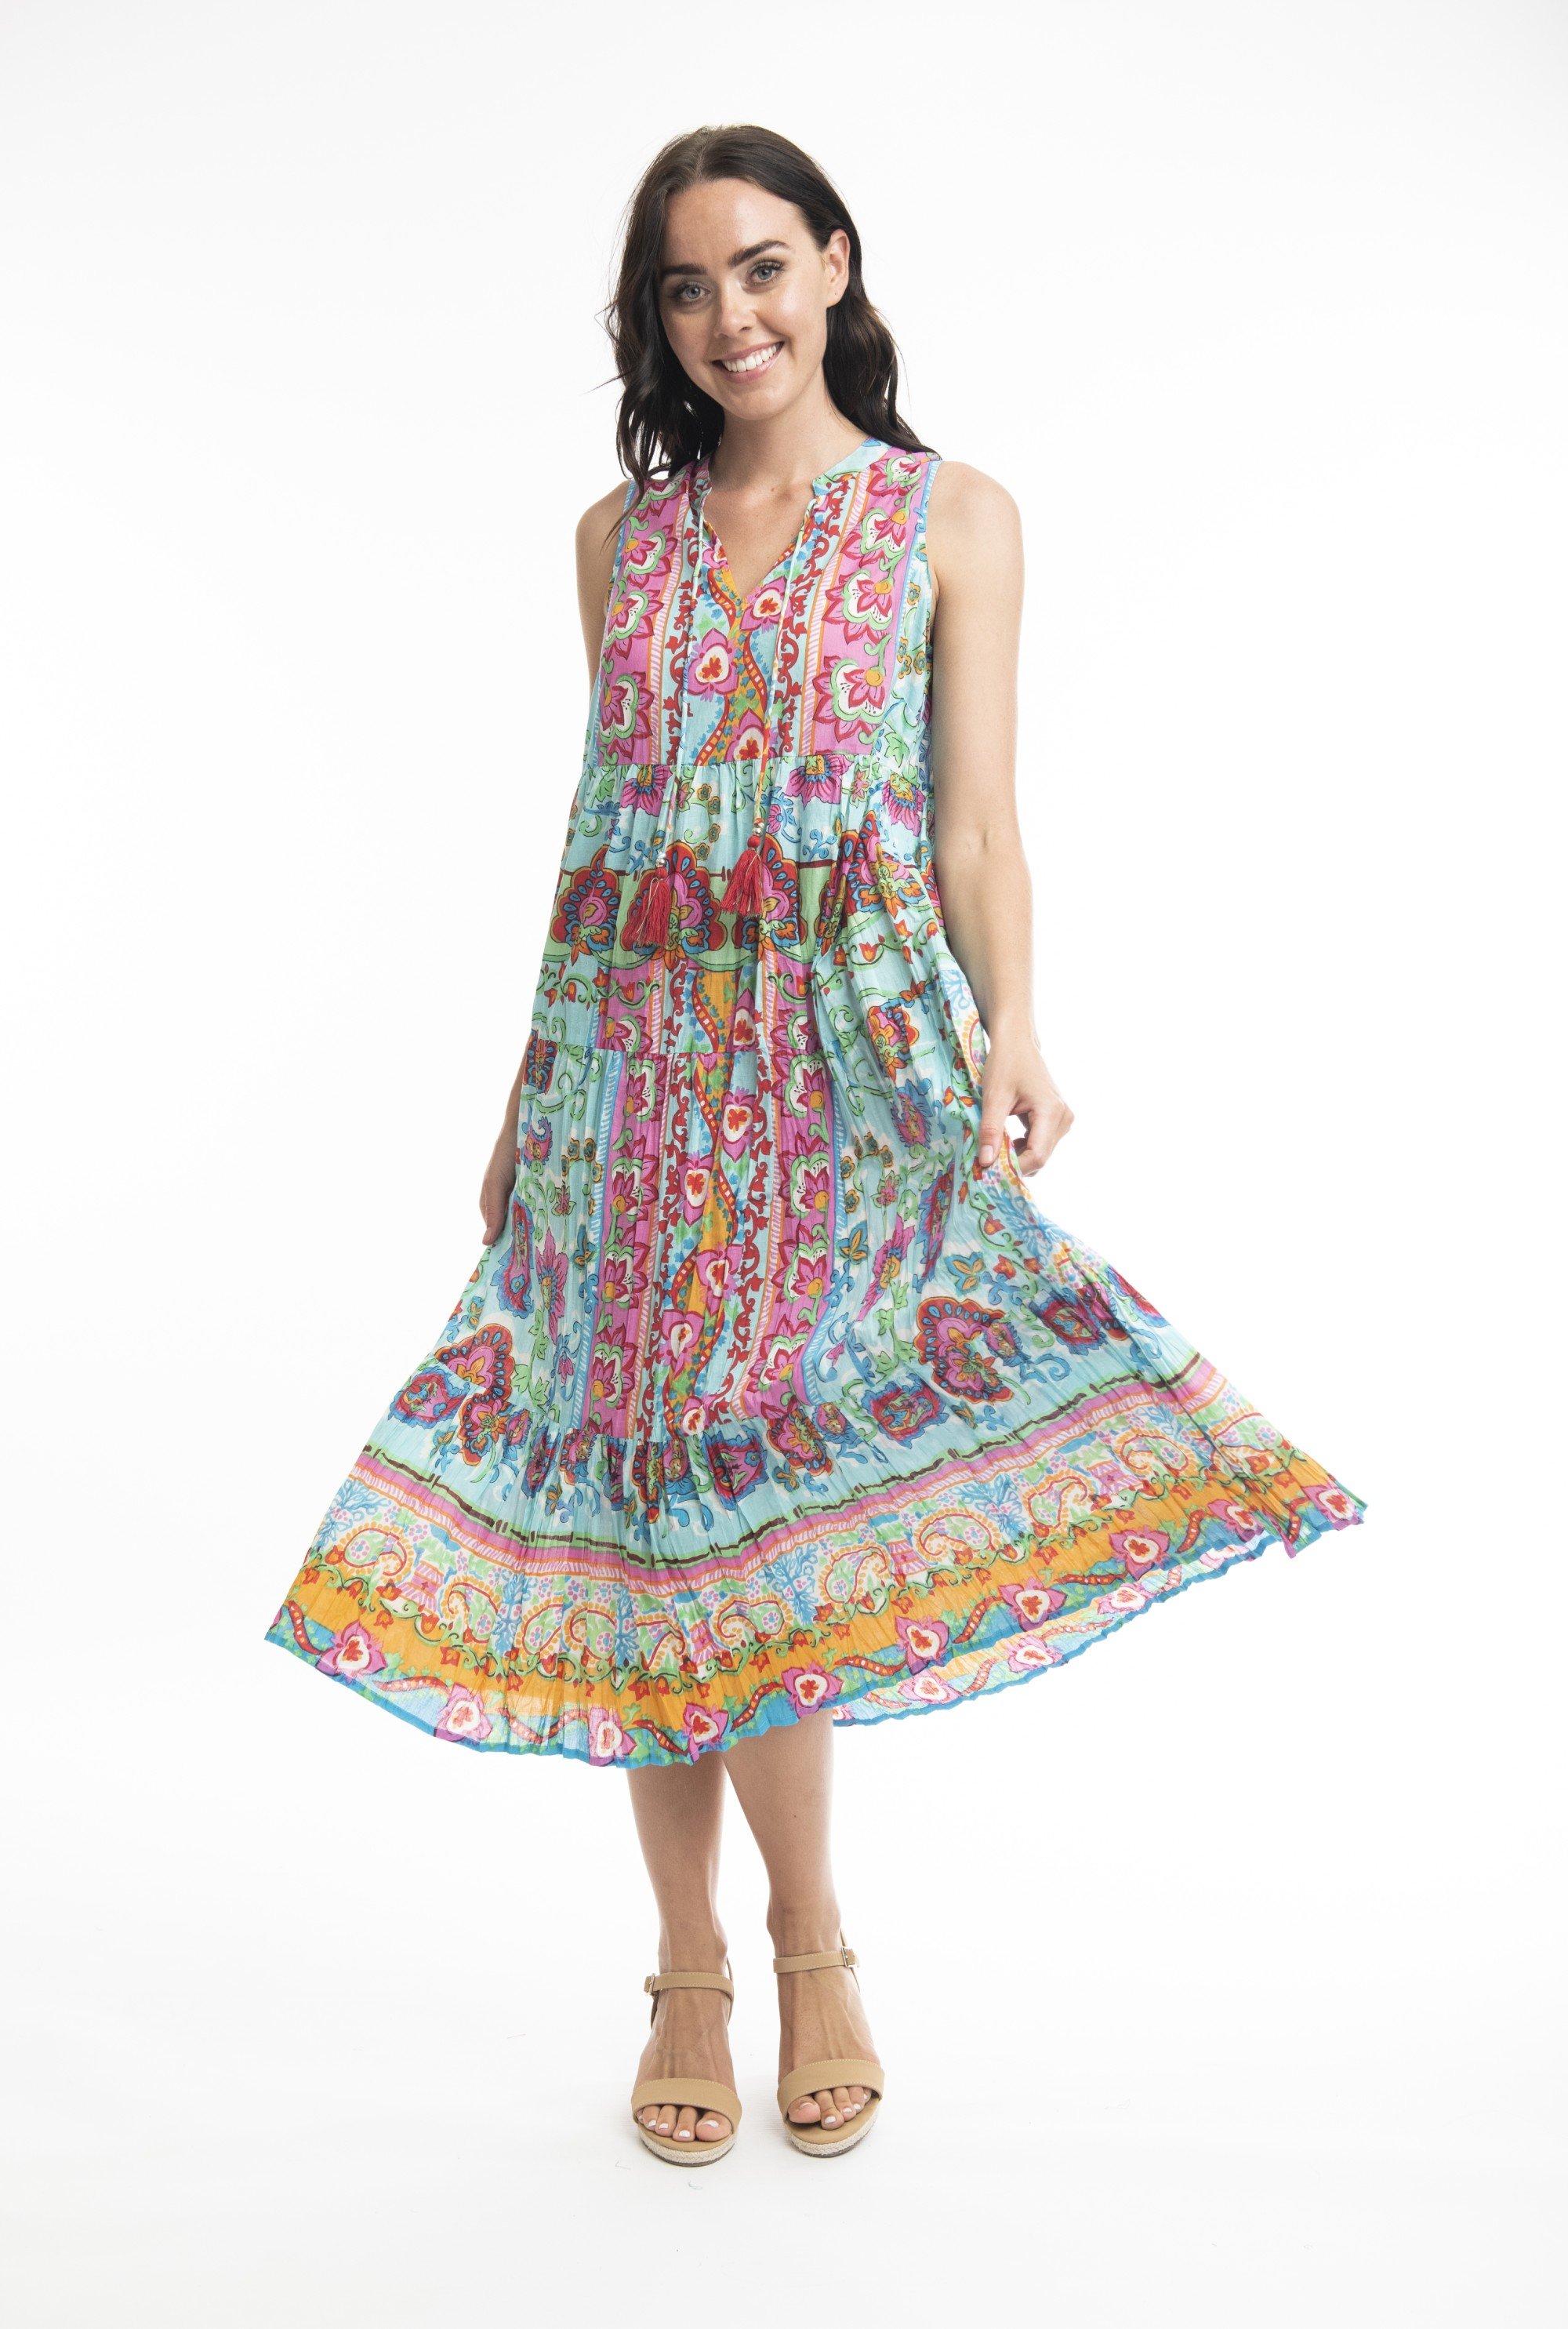 varosha-turq-dress-layers-sleeveless-324309_xl.jpeg